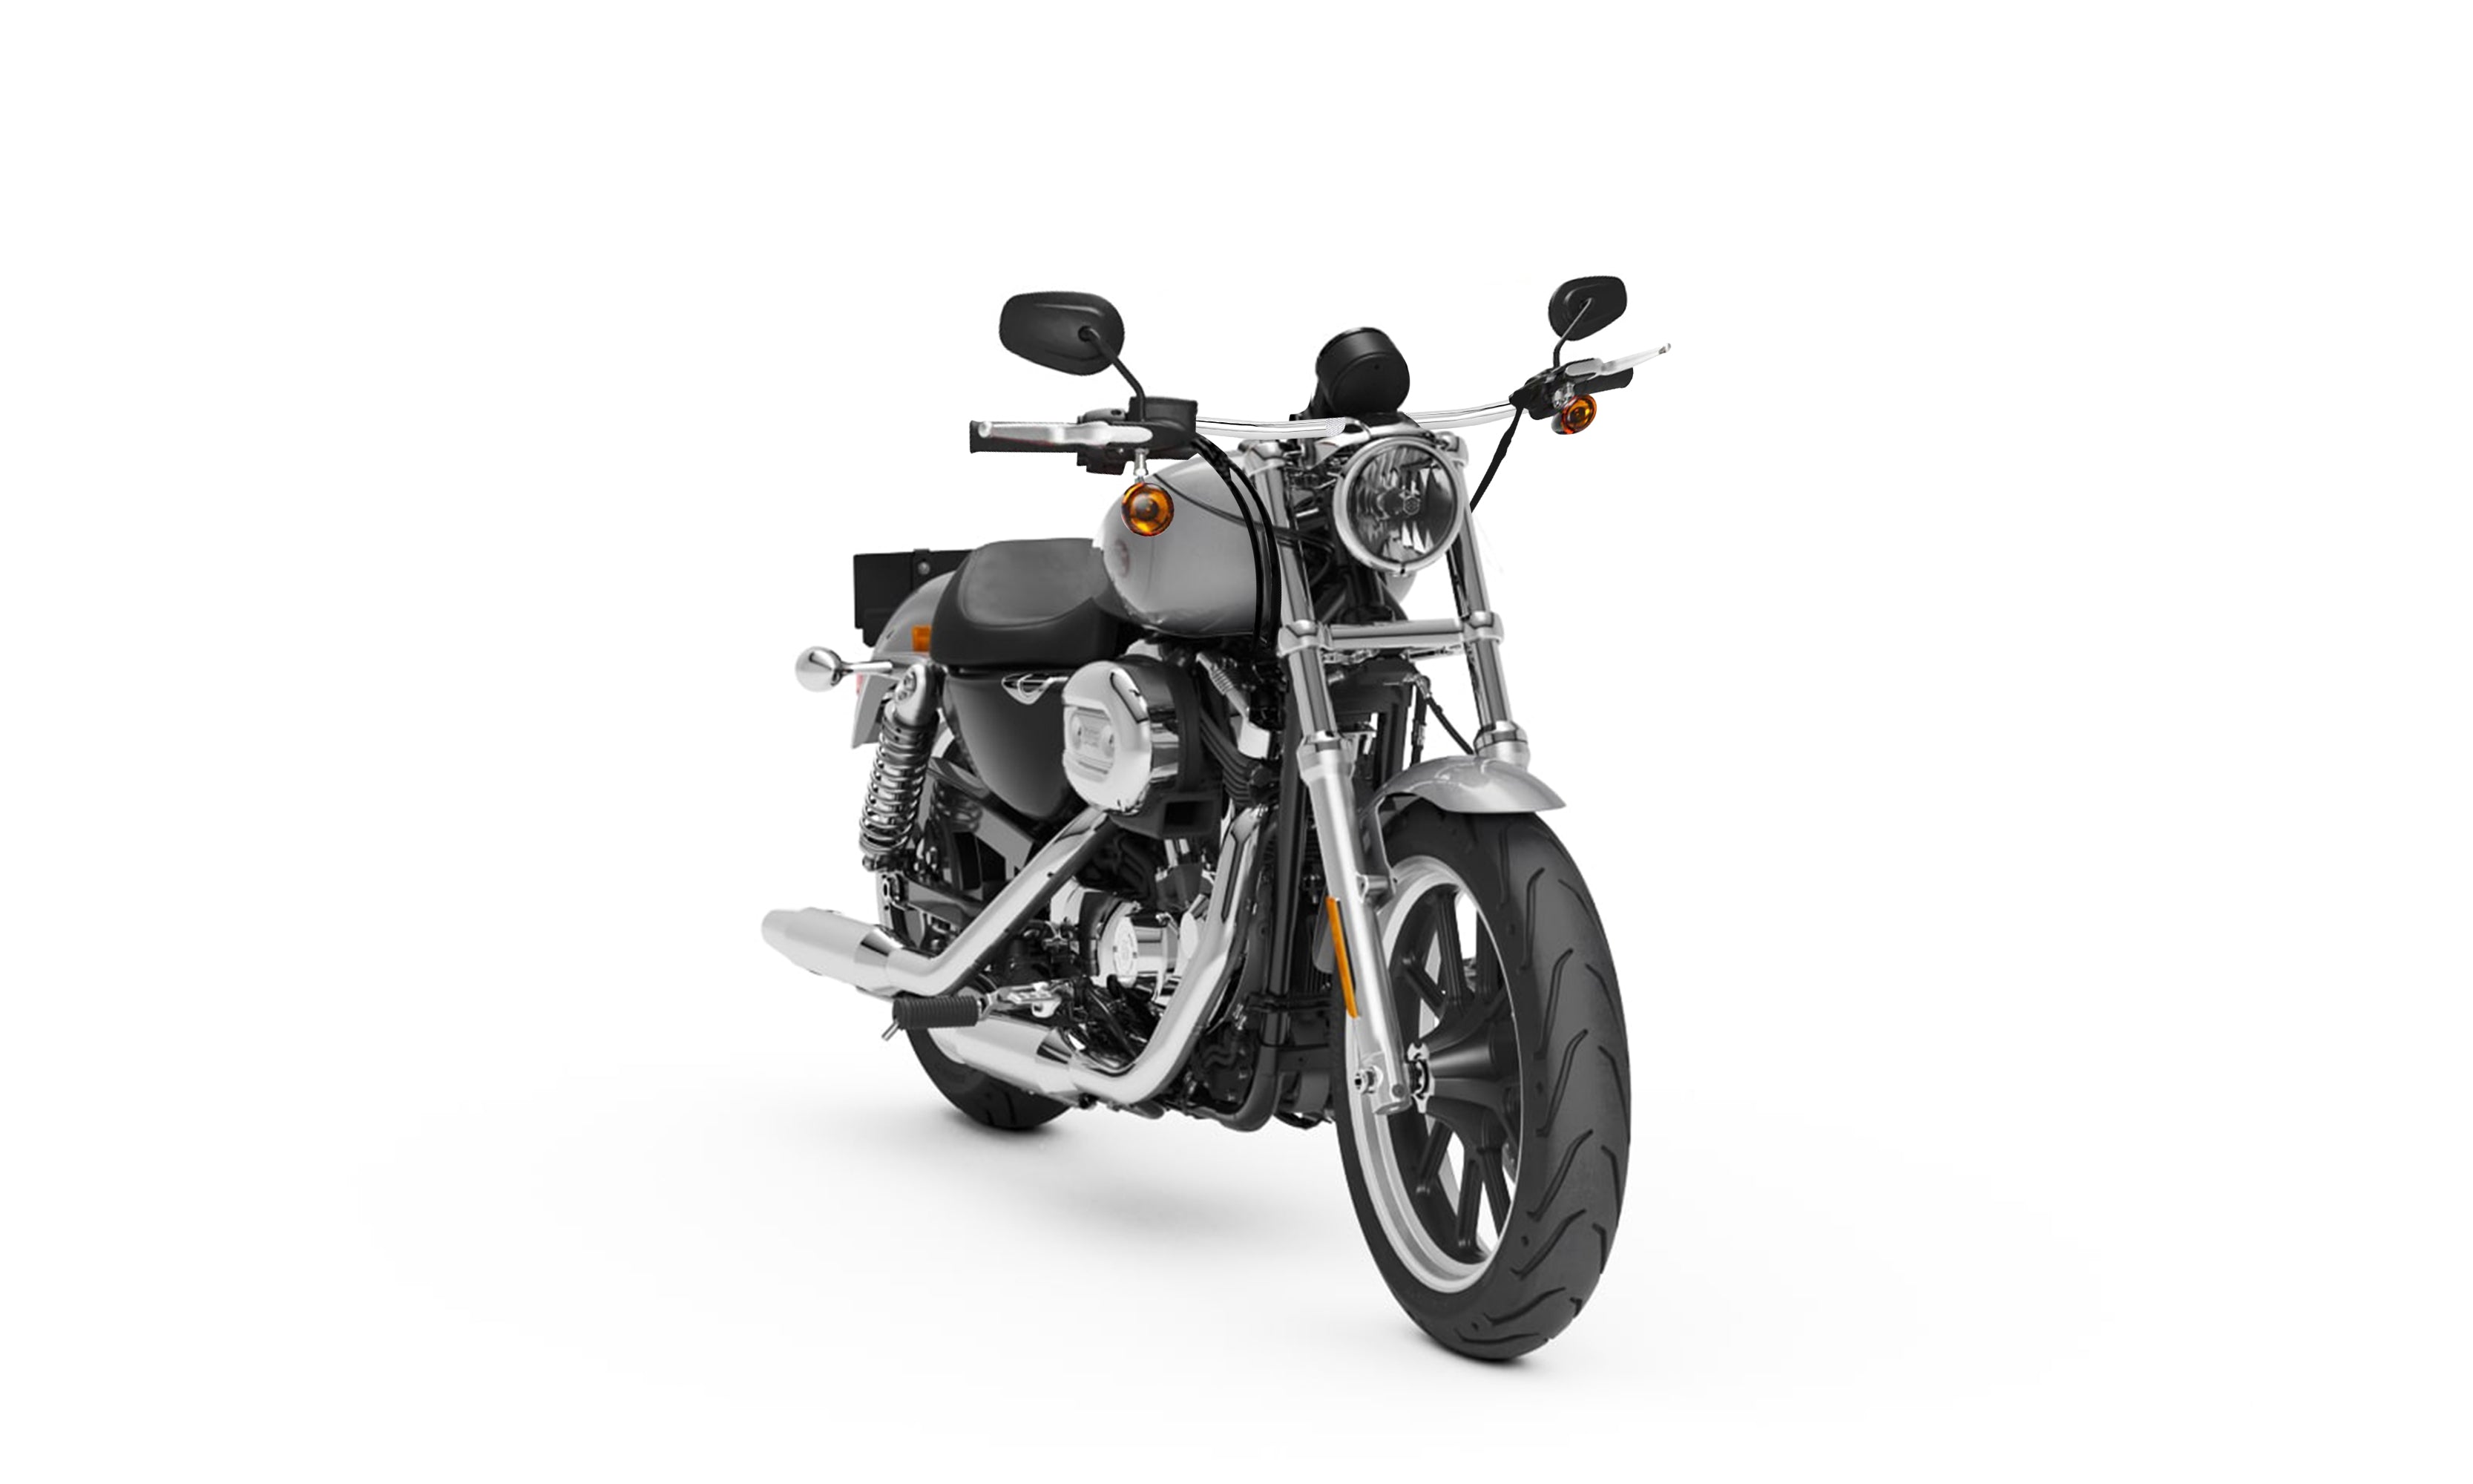 Viking Iron Born Drag Handlebar For Harley Sportster Superlow Chrome on Bikes View @expand